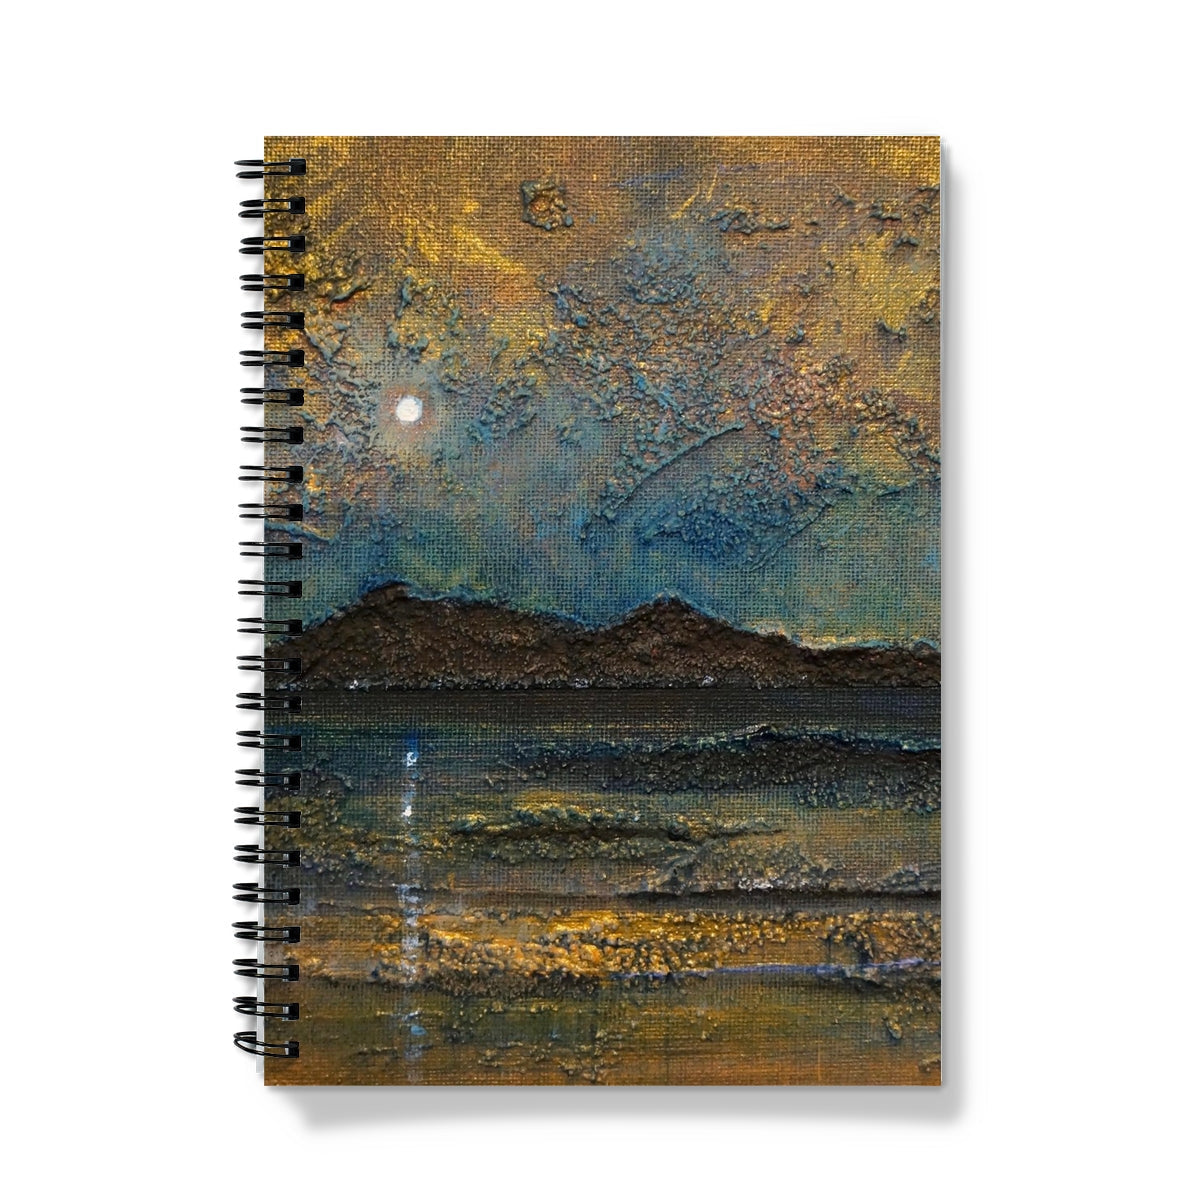 Arran Moonlight Art Gifts Notebook-Journals & Notebooks-Arran Art Gallery-A5-Graph-Paintings, Prints, Homeware, Art Gifts From Scotland By Scottish Artist Kevin Hunter